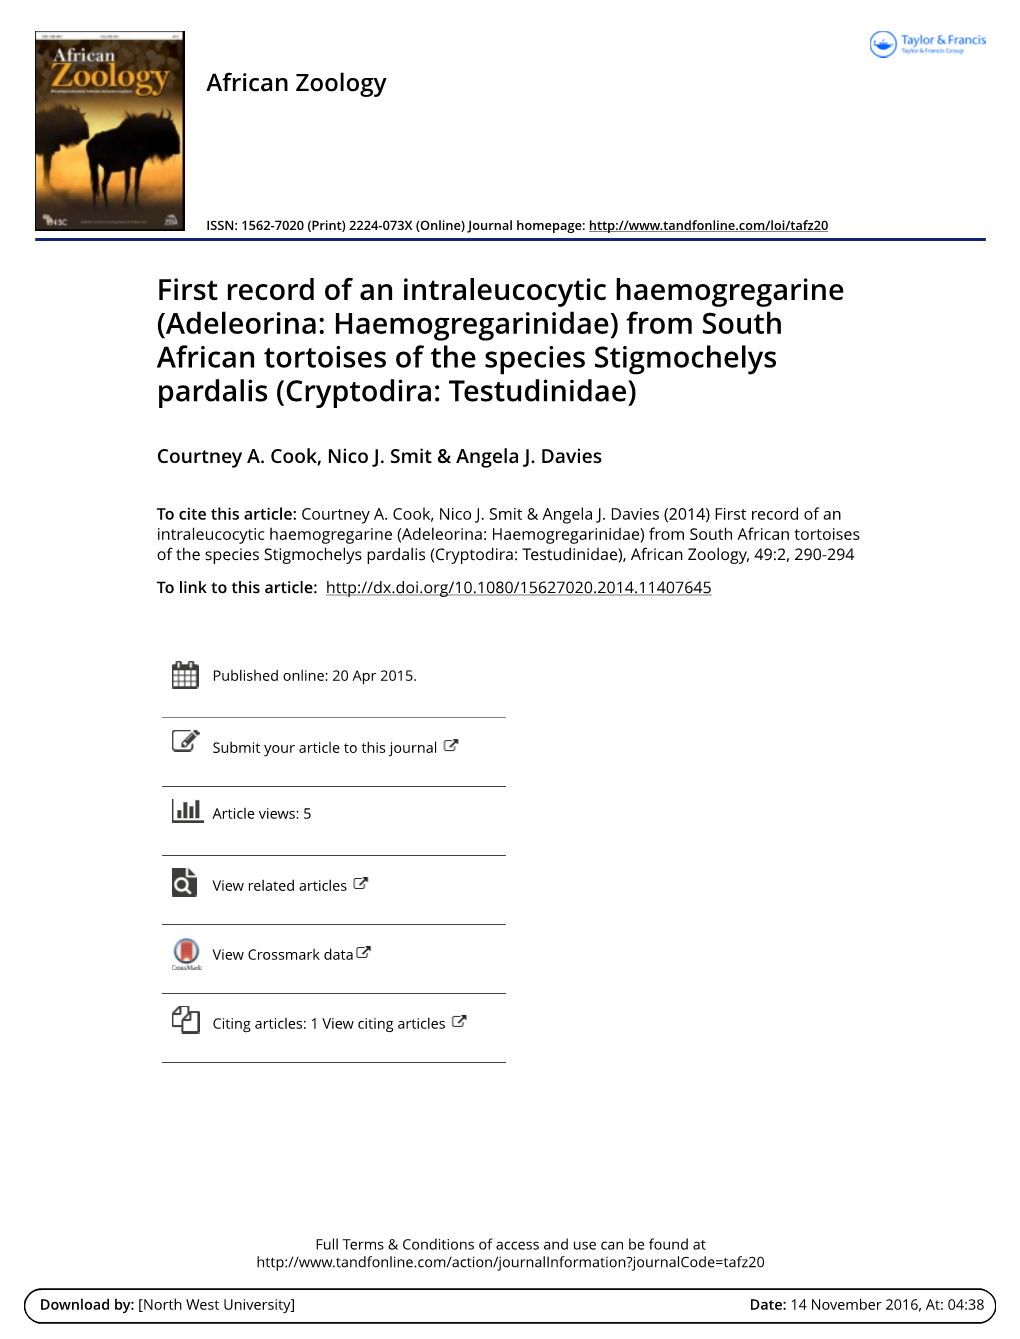 First Record of an Intraleucocytic Haemogregarine (Adeleorina